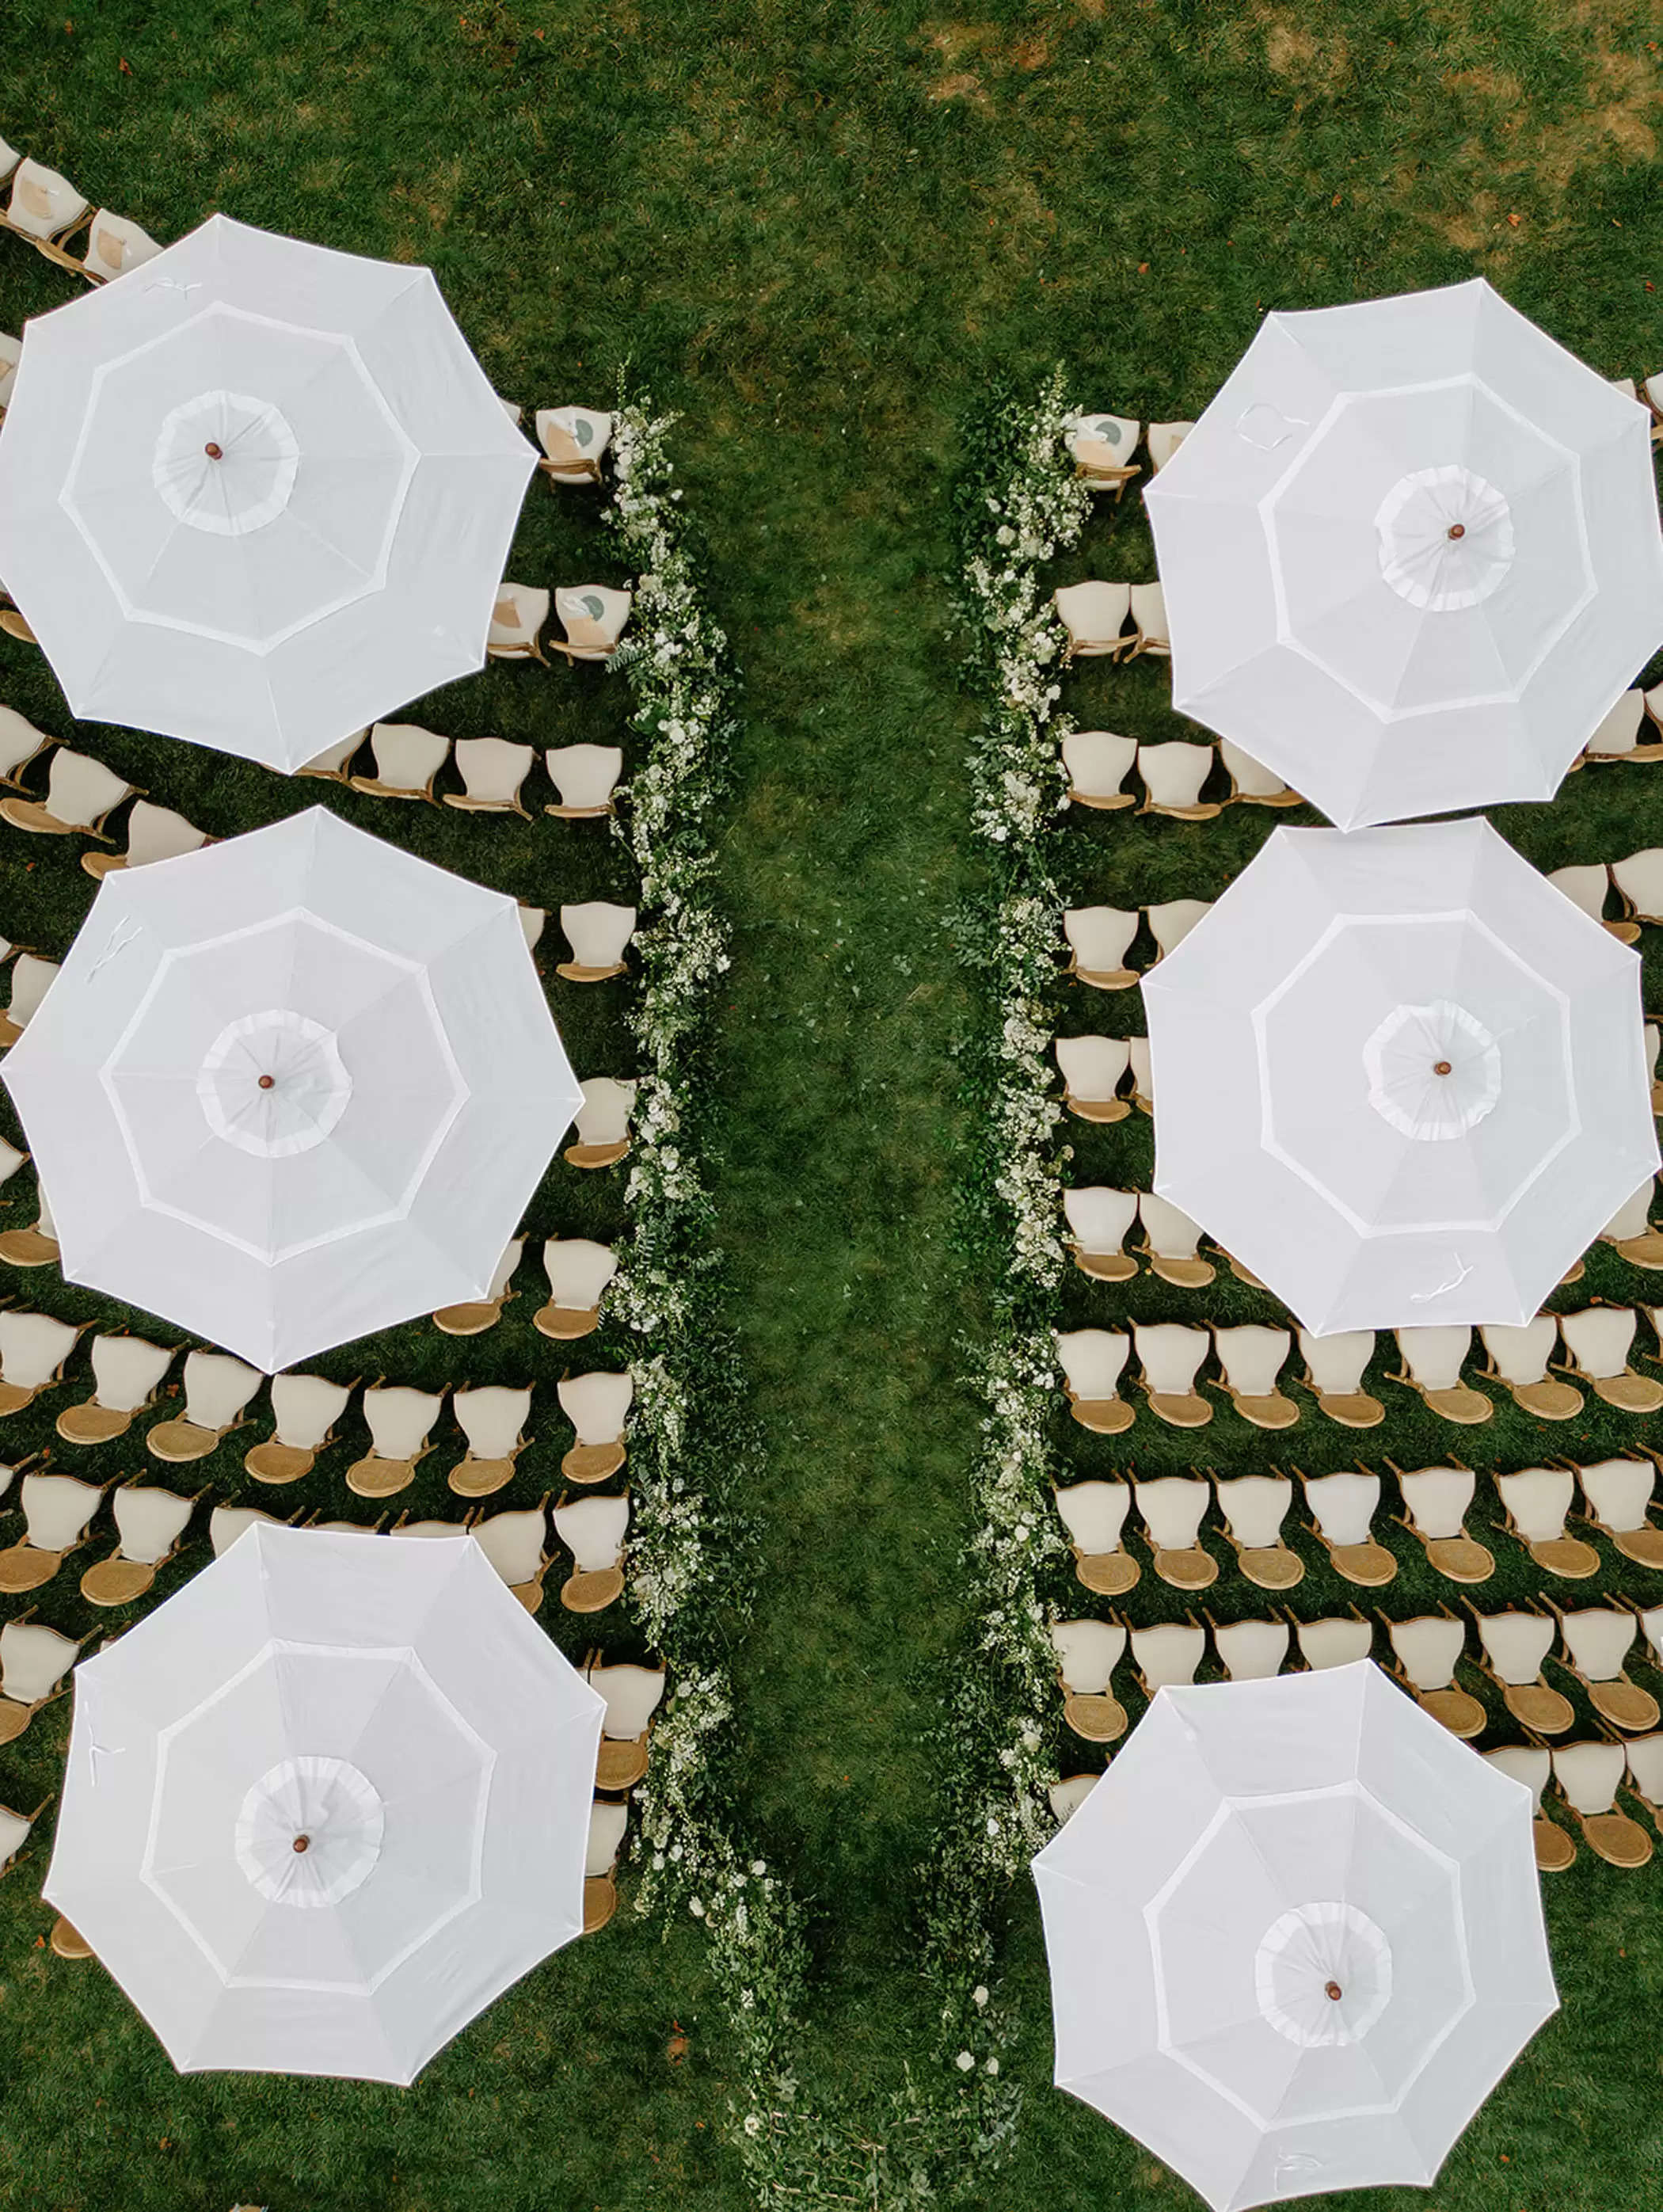 A Wonderful Backyard Social gathering Wedding ceremony Filled with Enchanting + Fantastical Flowers